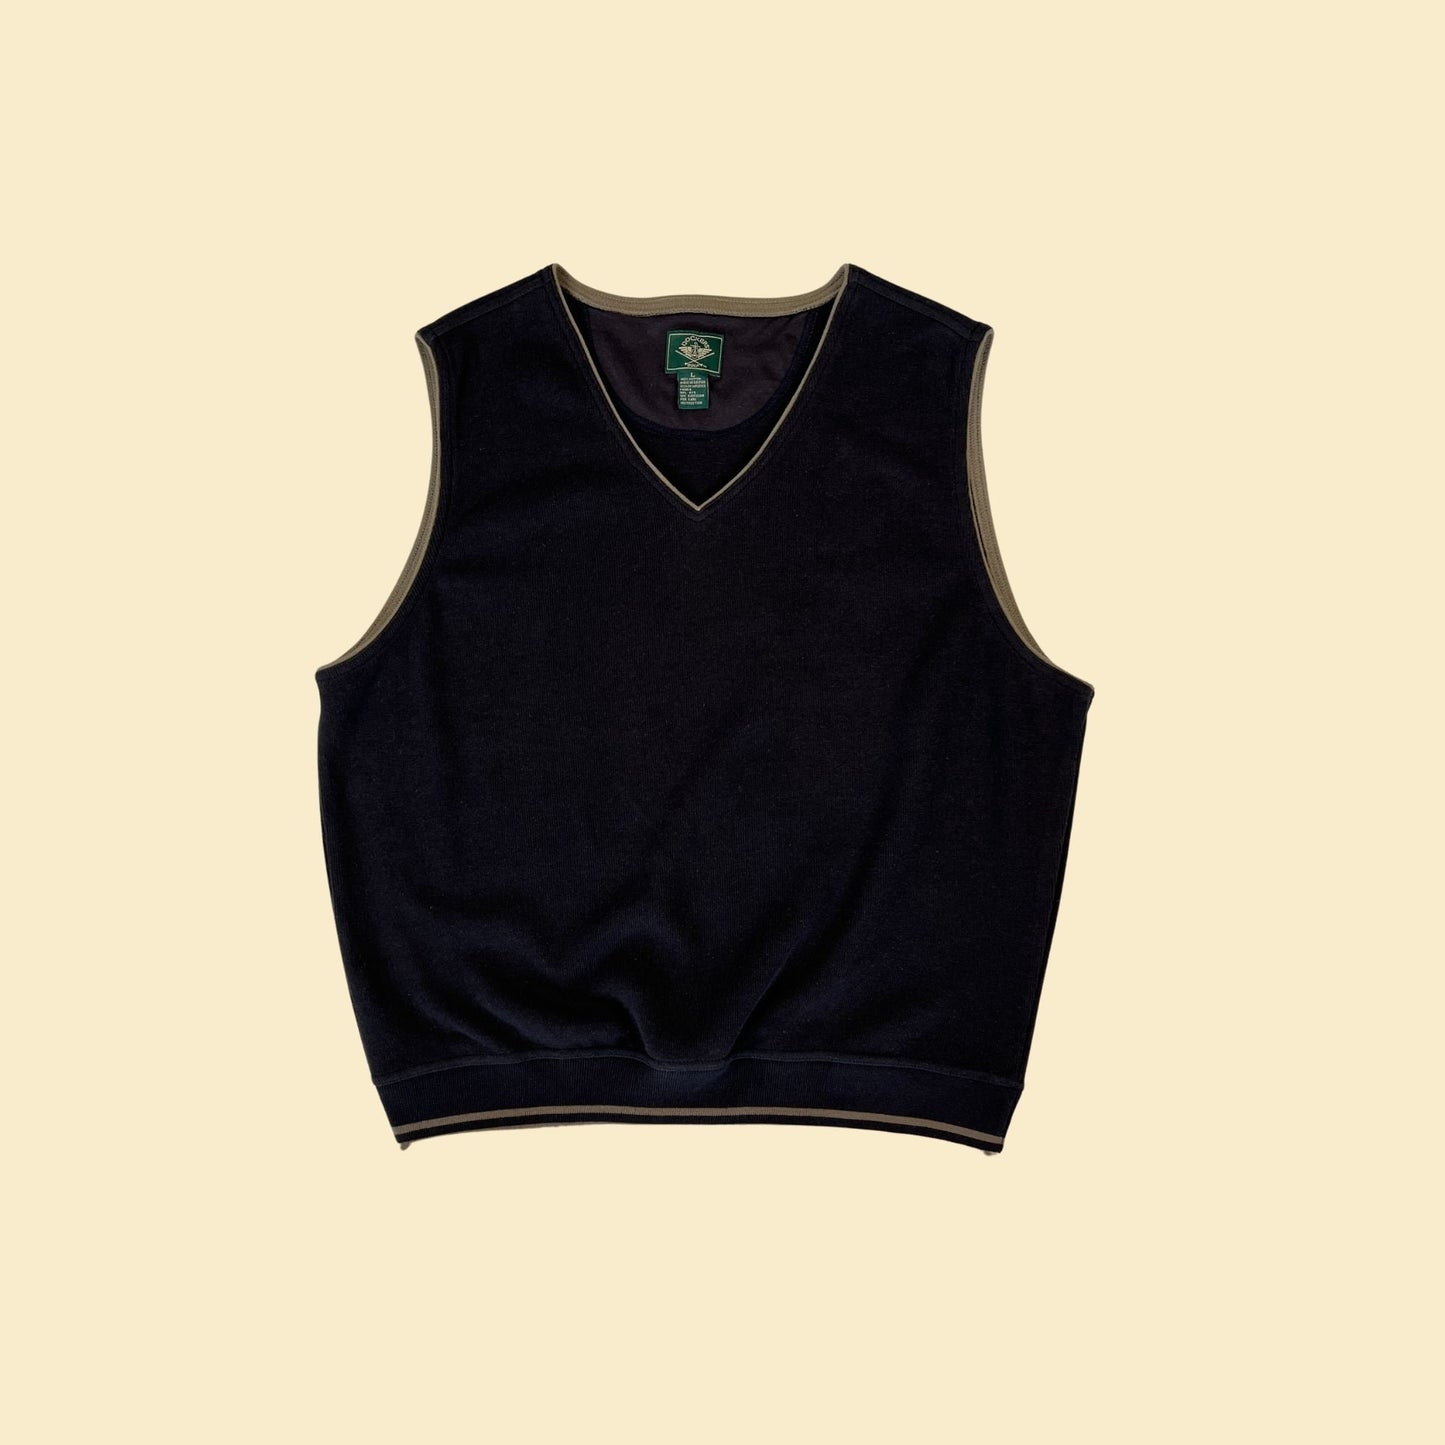 90s size L golf vest, men's black & green sweater vest by Dockers Golf